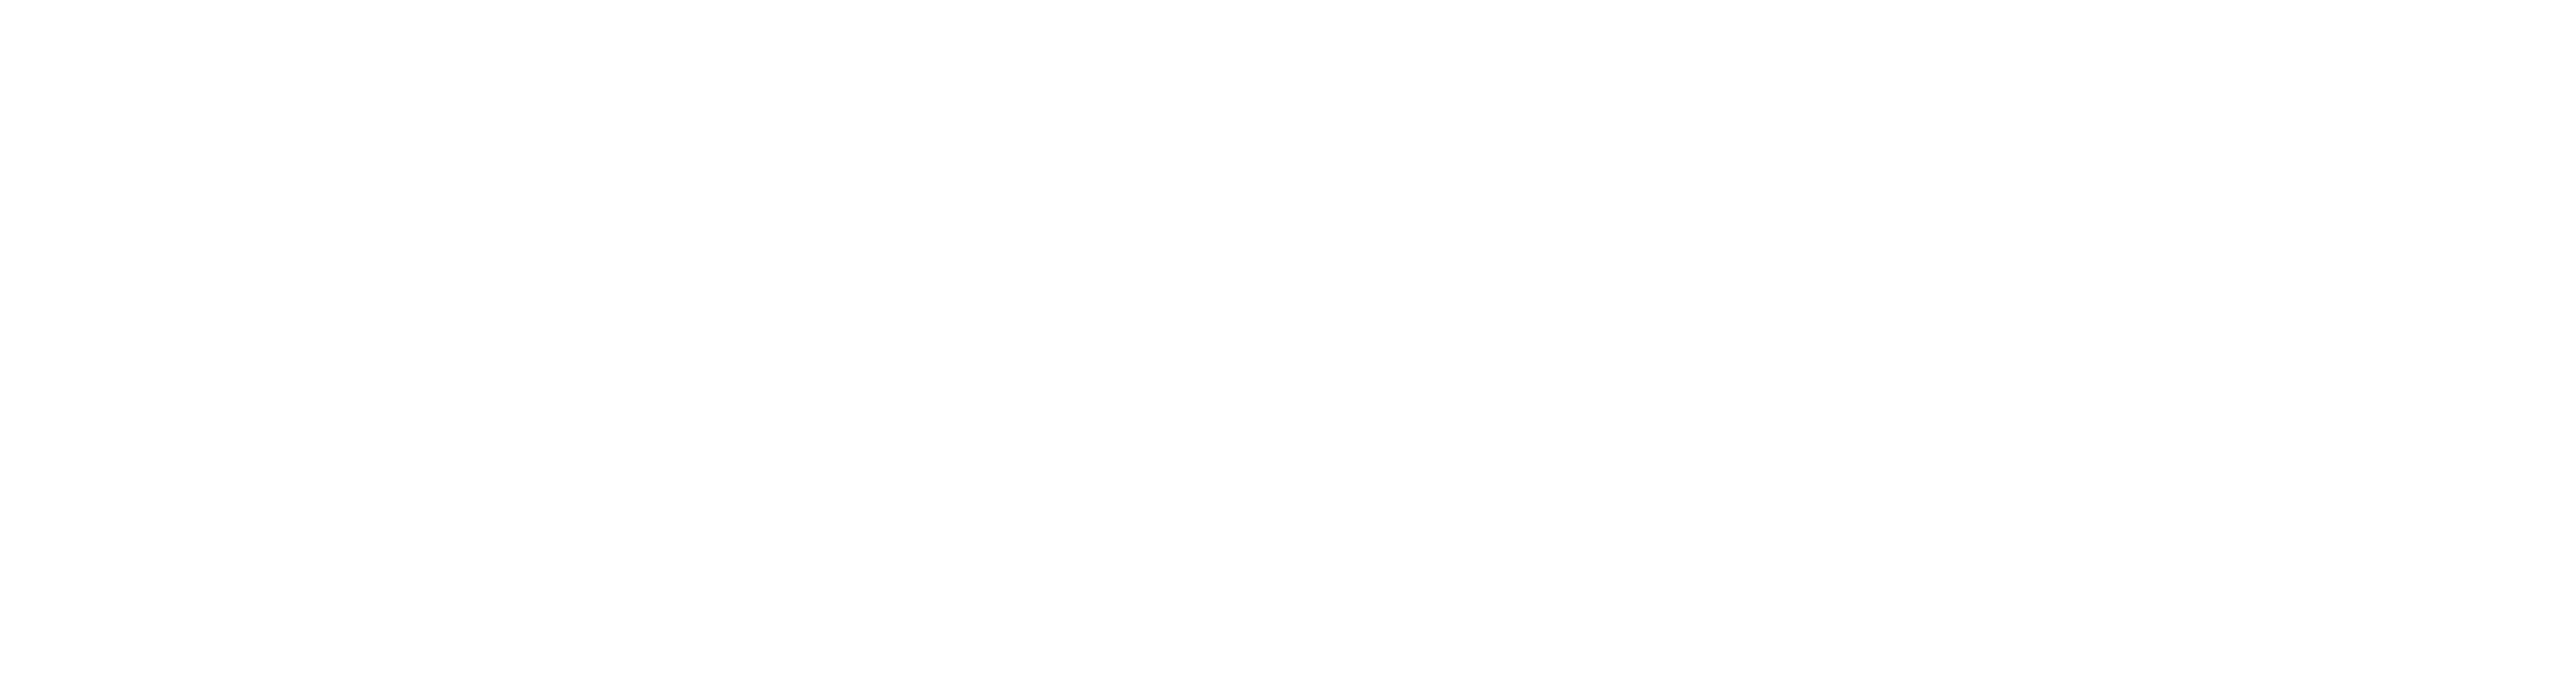 (Mackay-Whitsunday-Isaac)